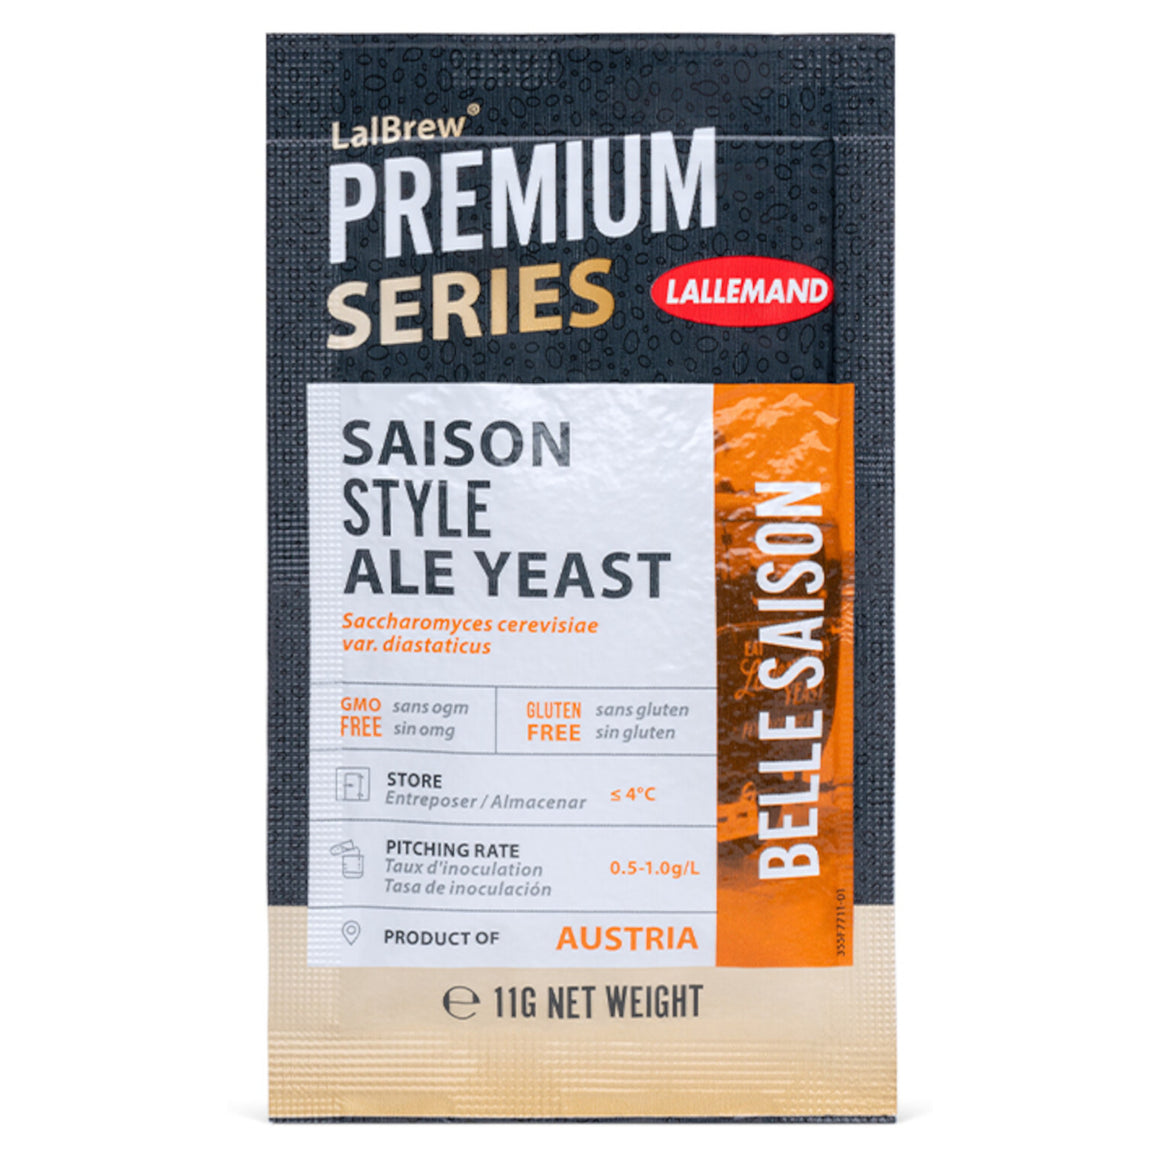 Lallemand Belle Saison Ale Yeast, 11g